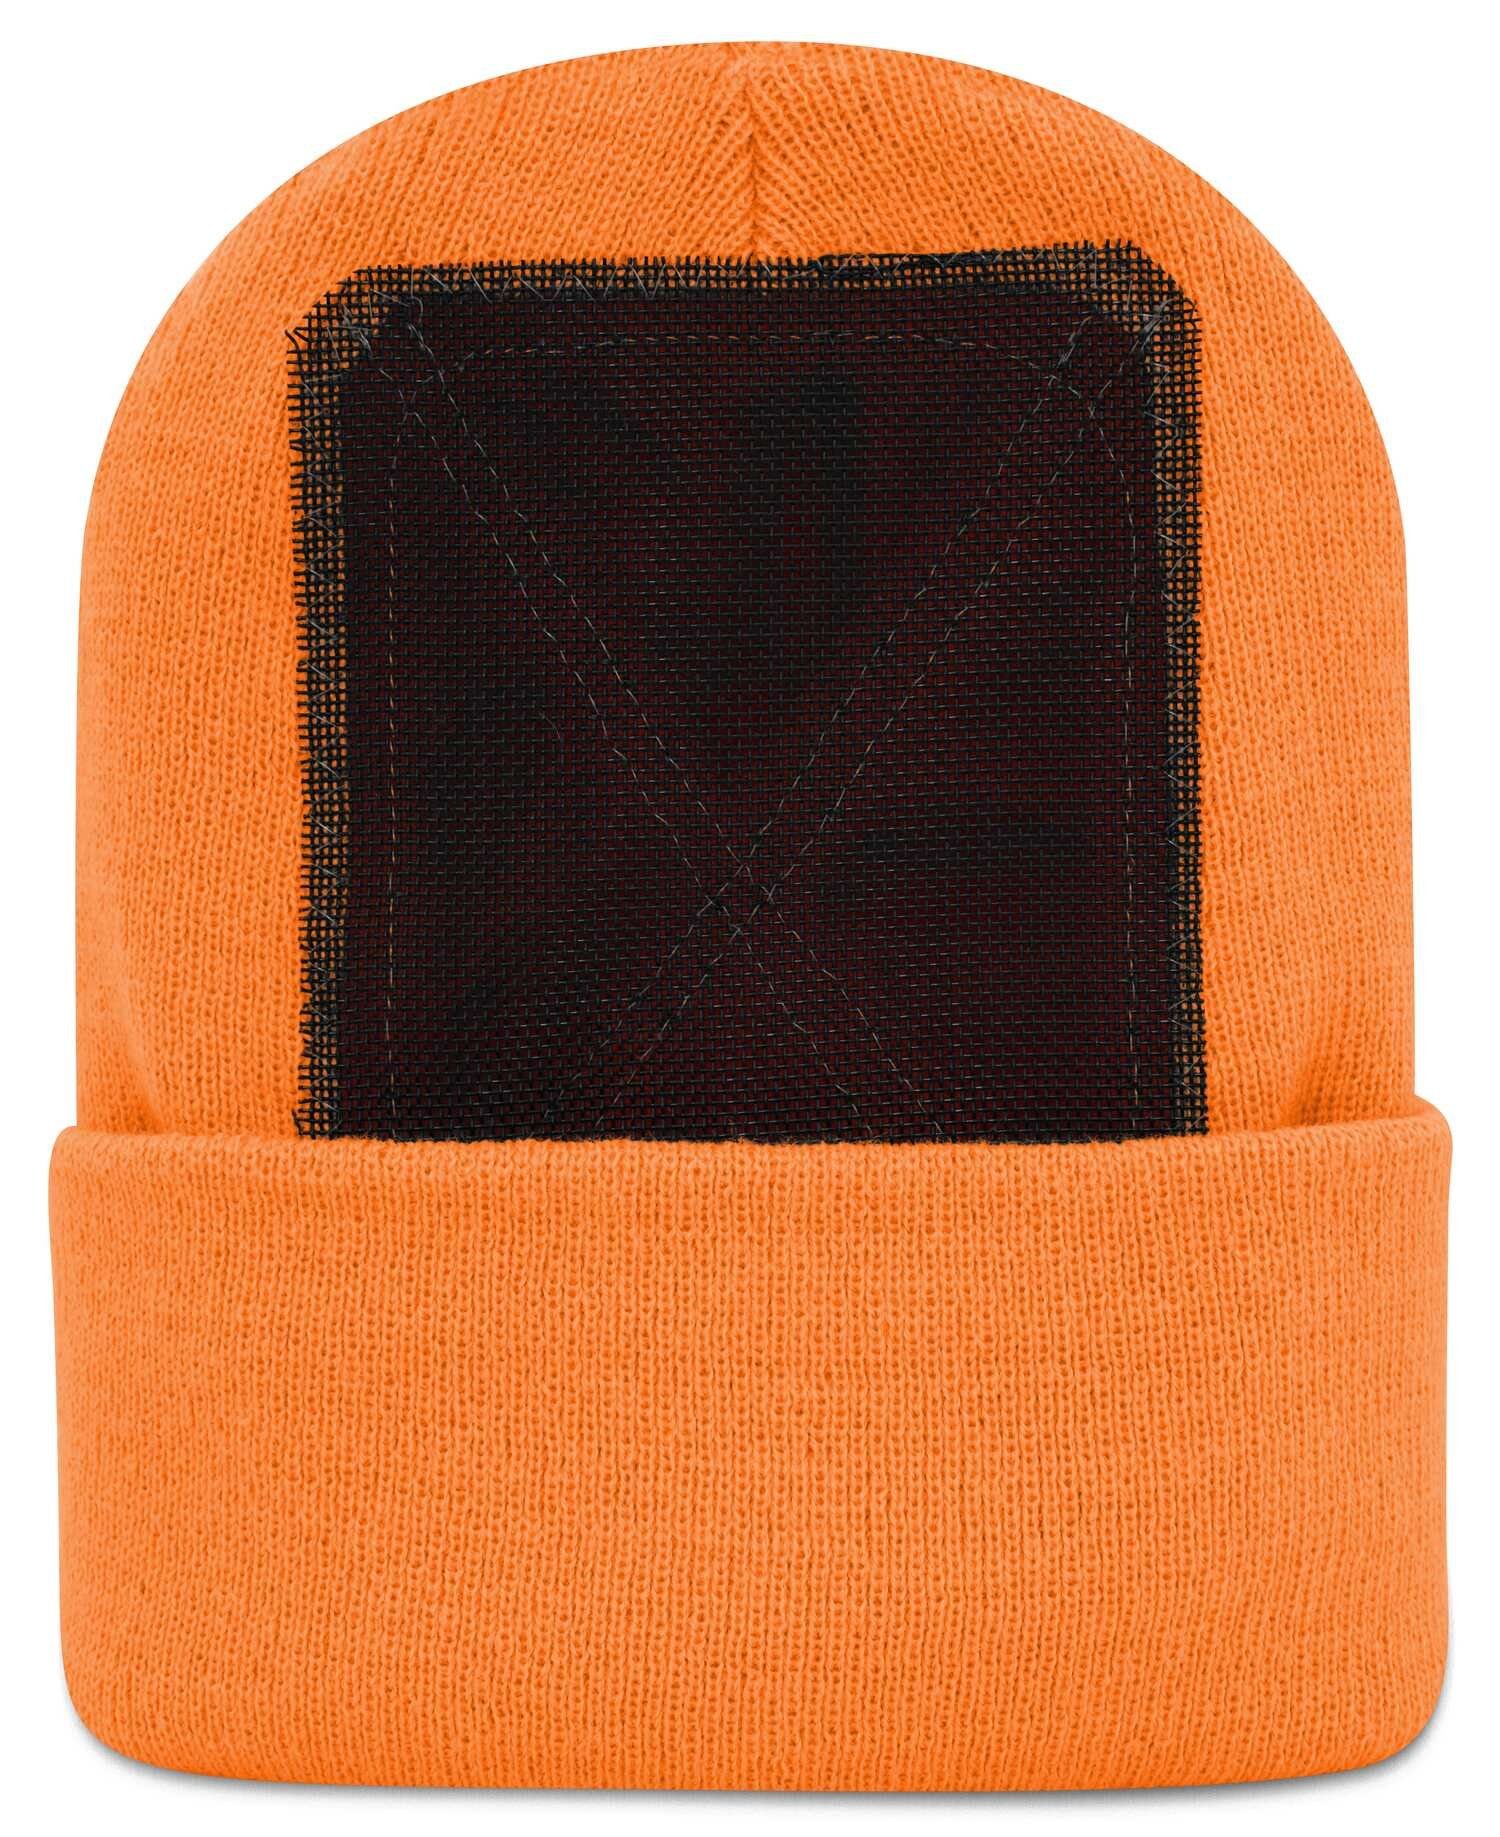 BACKSPIN Sportswear Beanie Headspin Orange